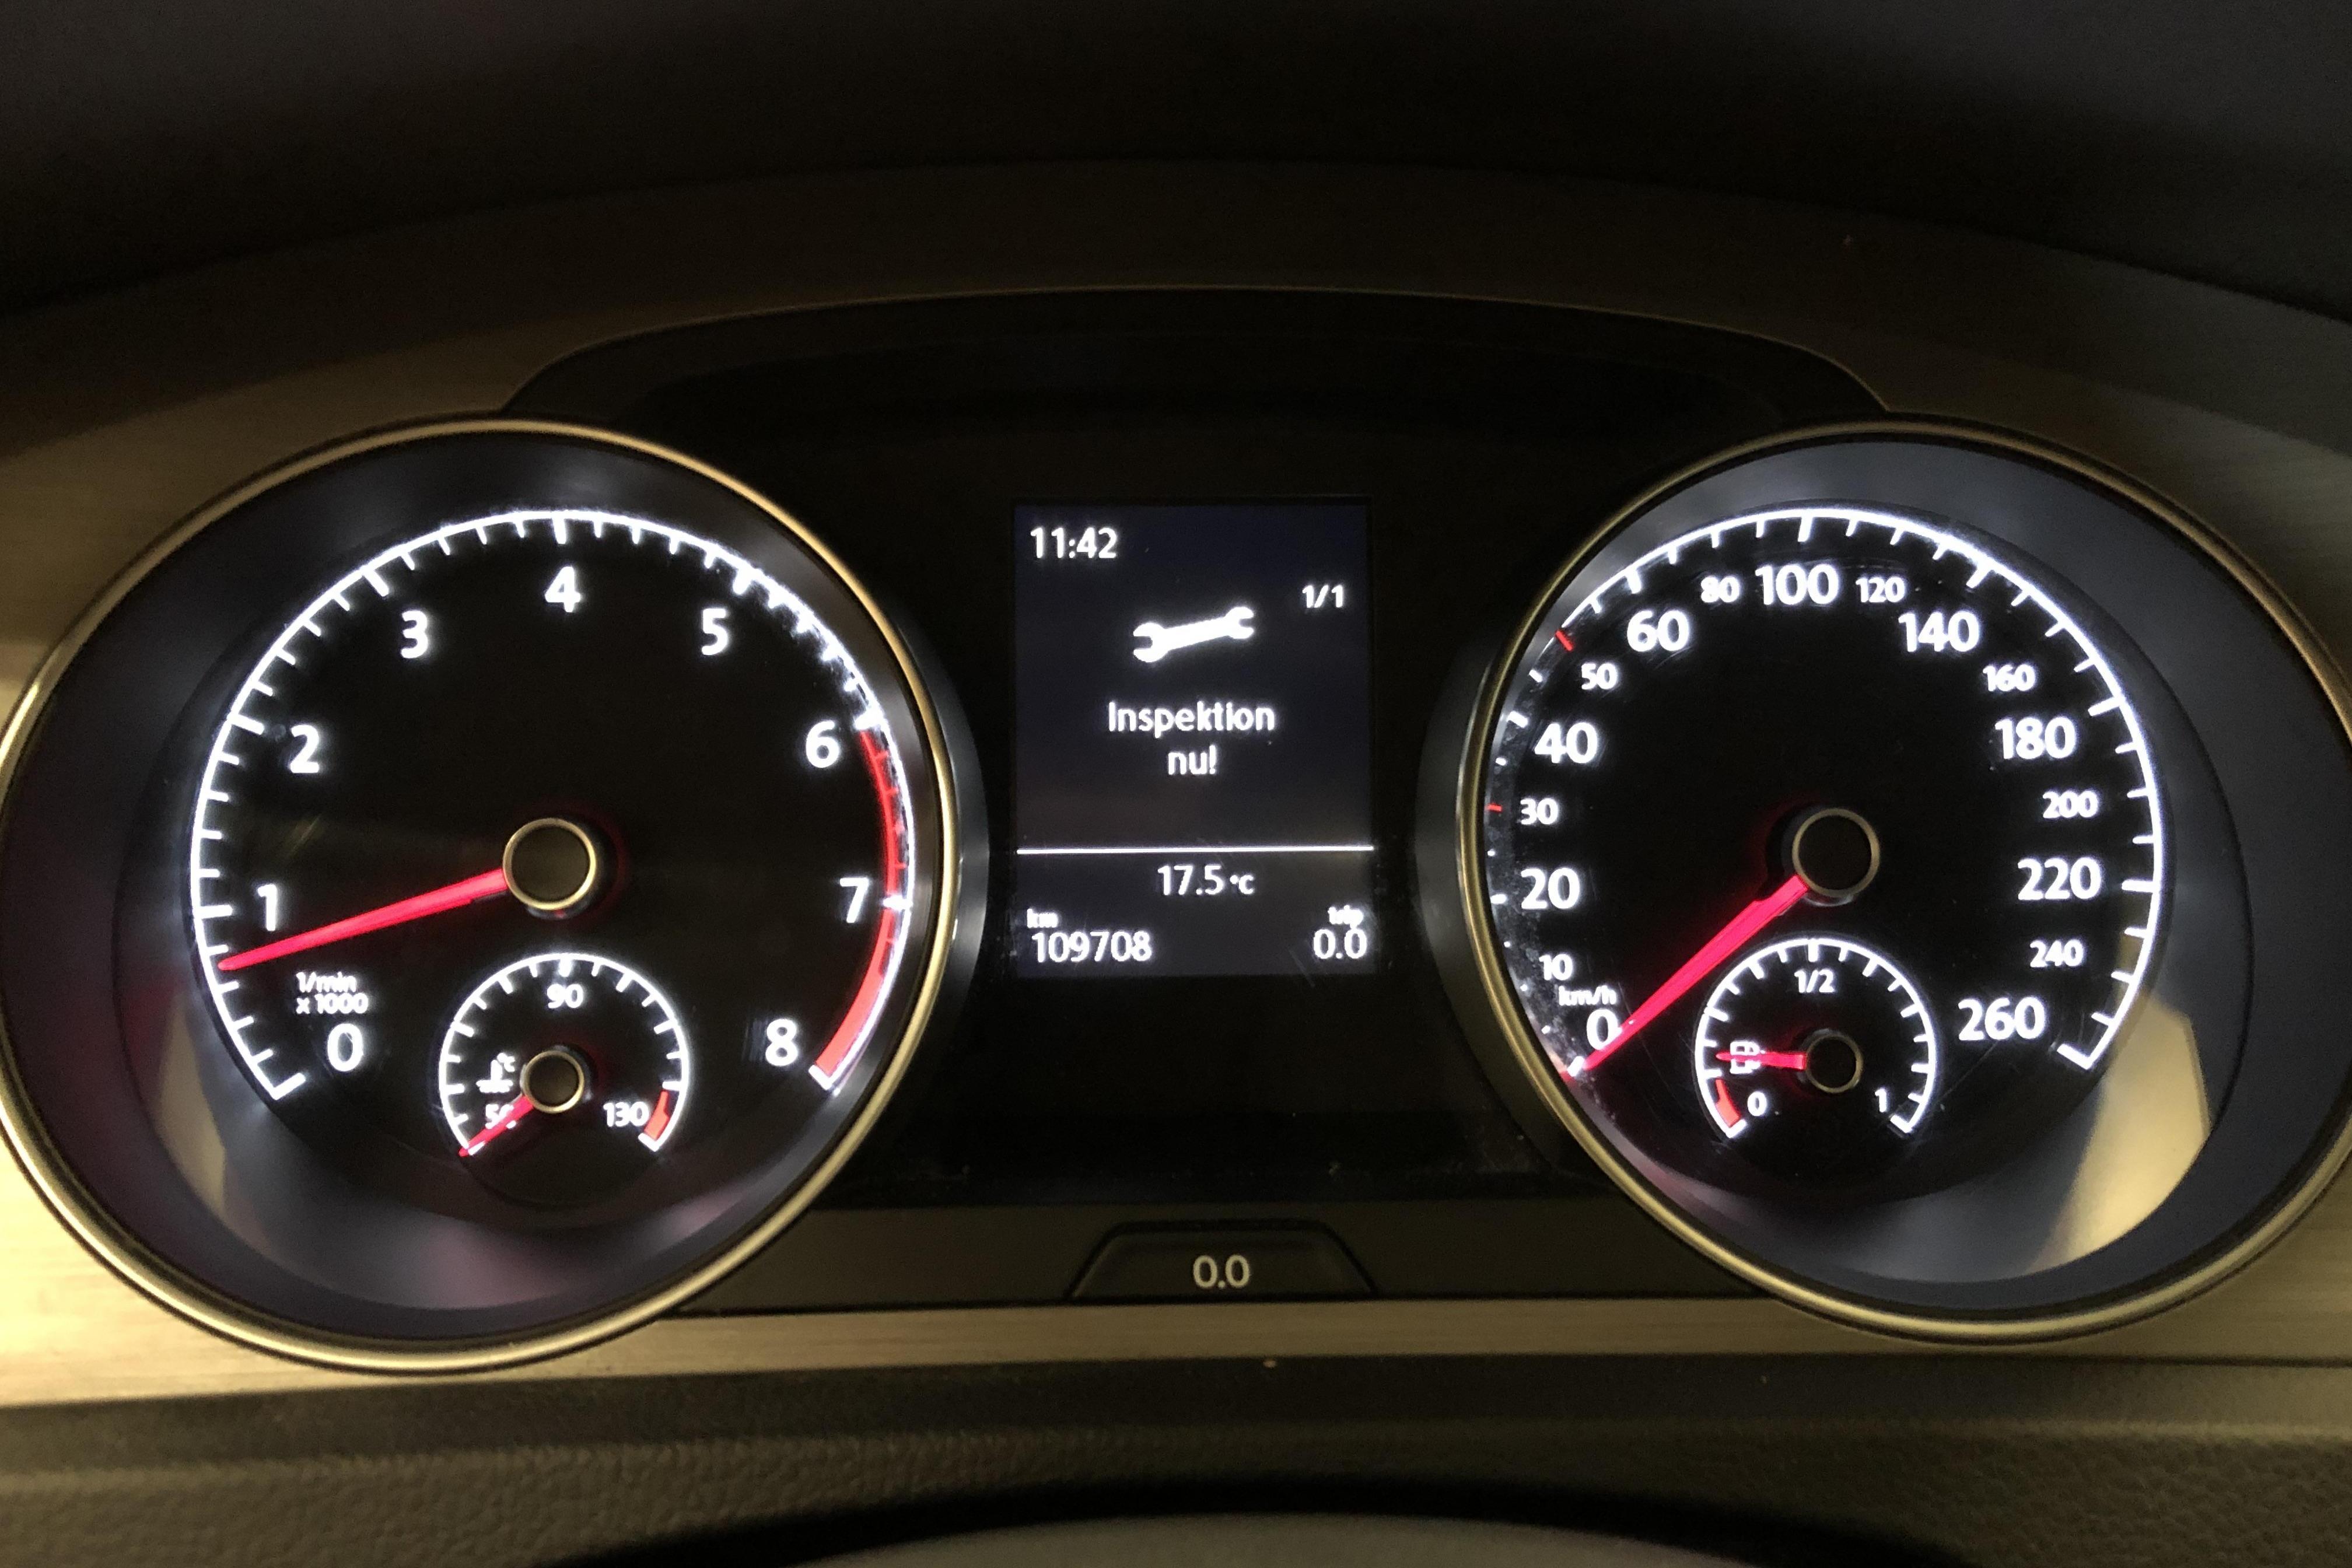 VW Golf VII 1.2 TSI Sportscombi (105hk) - 10 971 mil - Manuell - röd - 2014